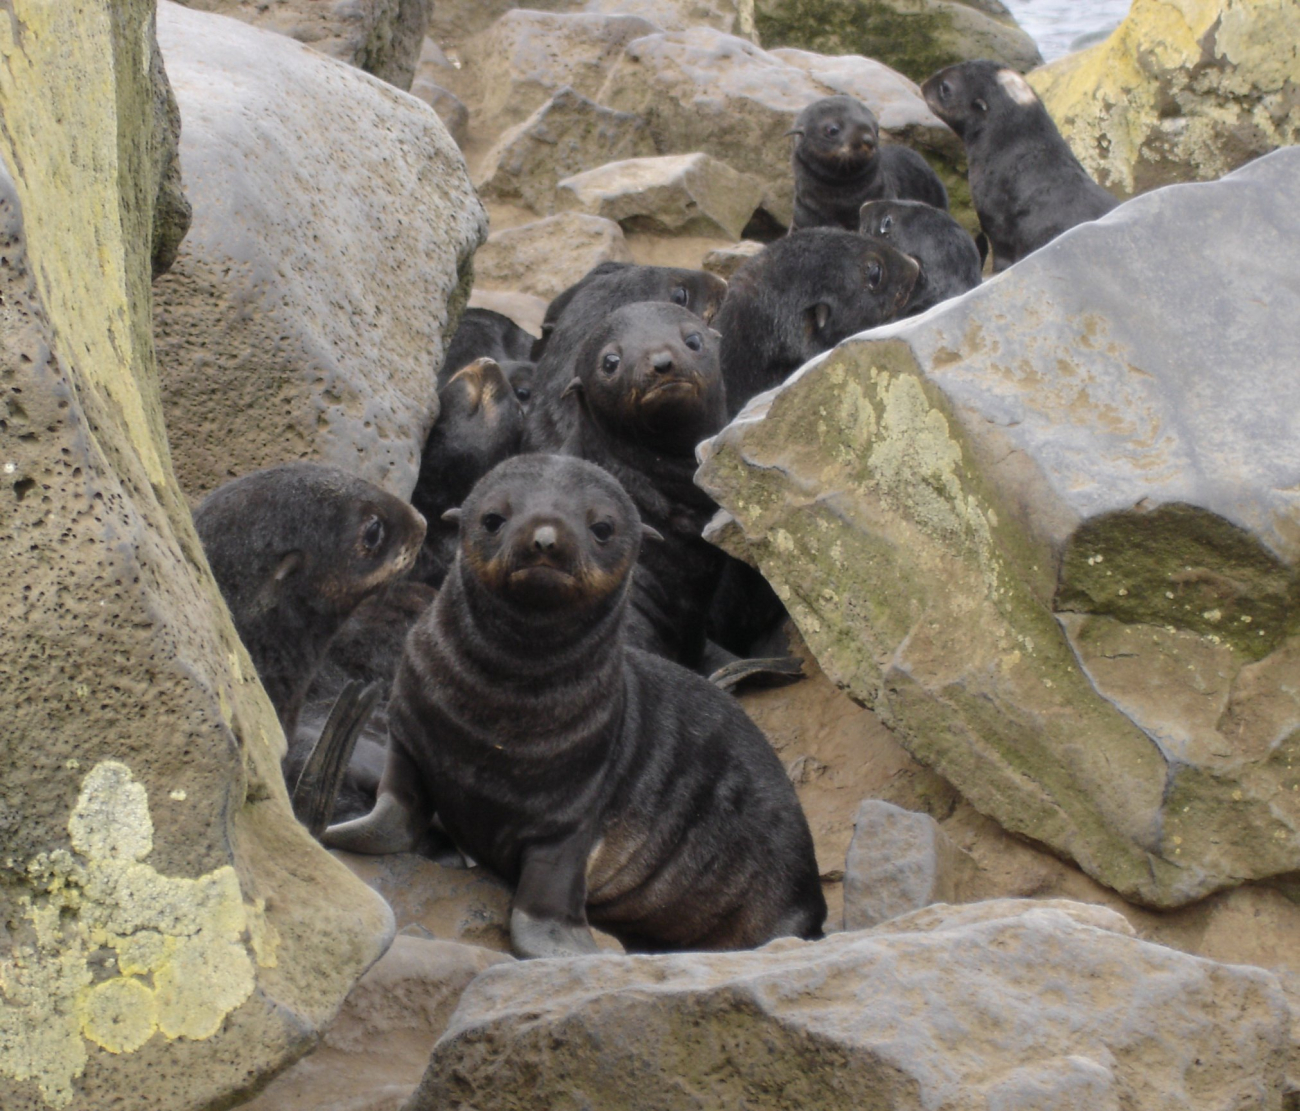 Northern fur seal pups